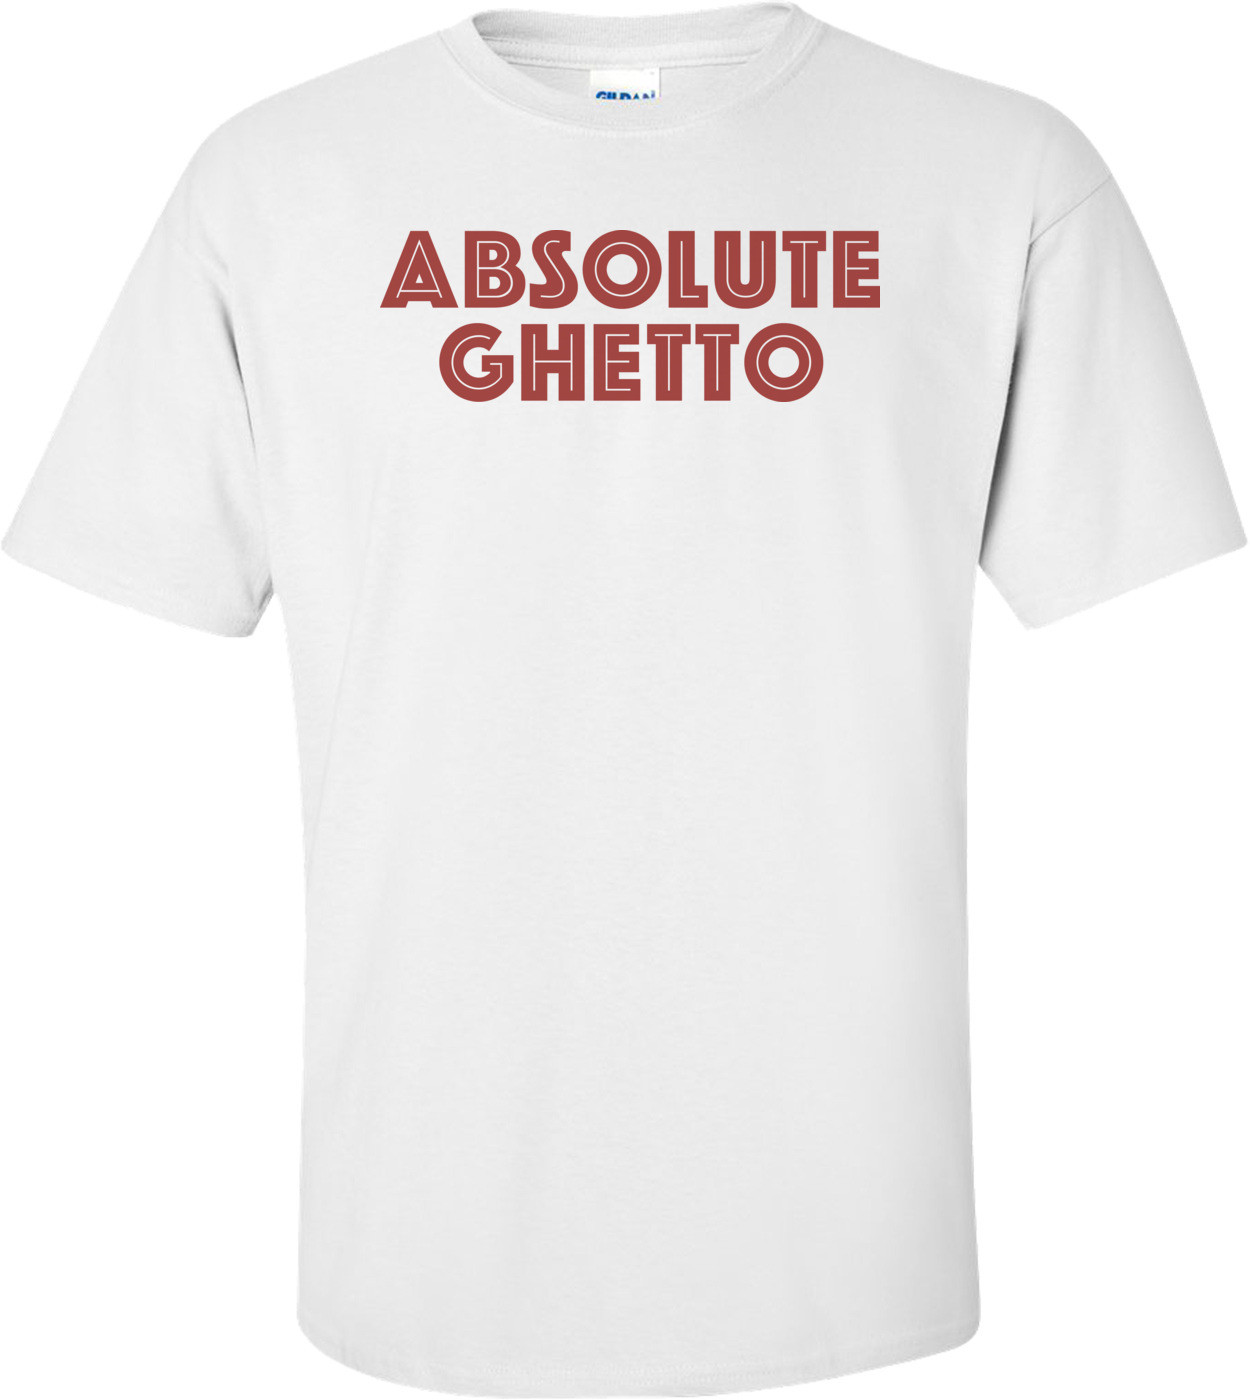 Absolute Ghetto